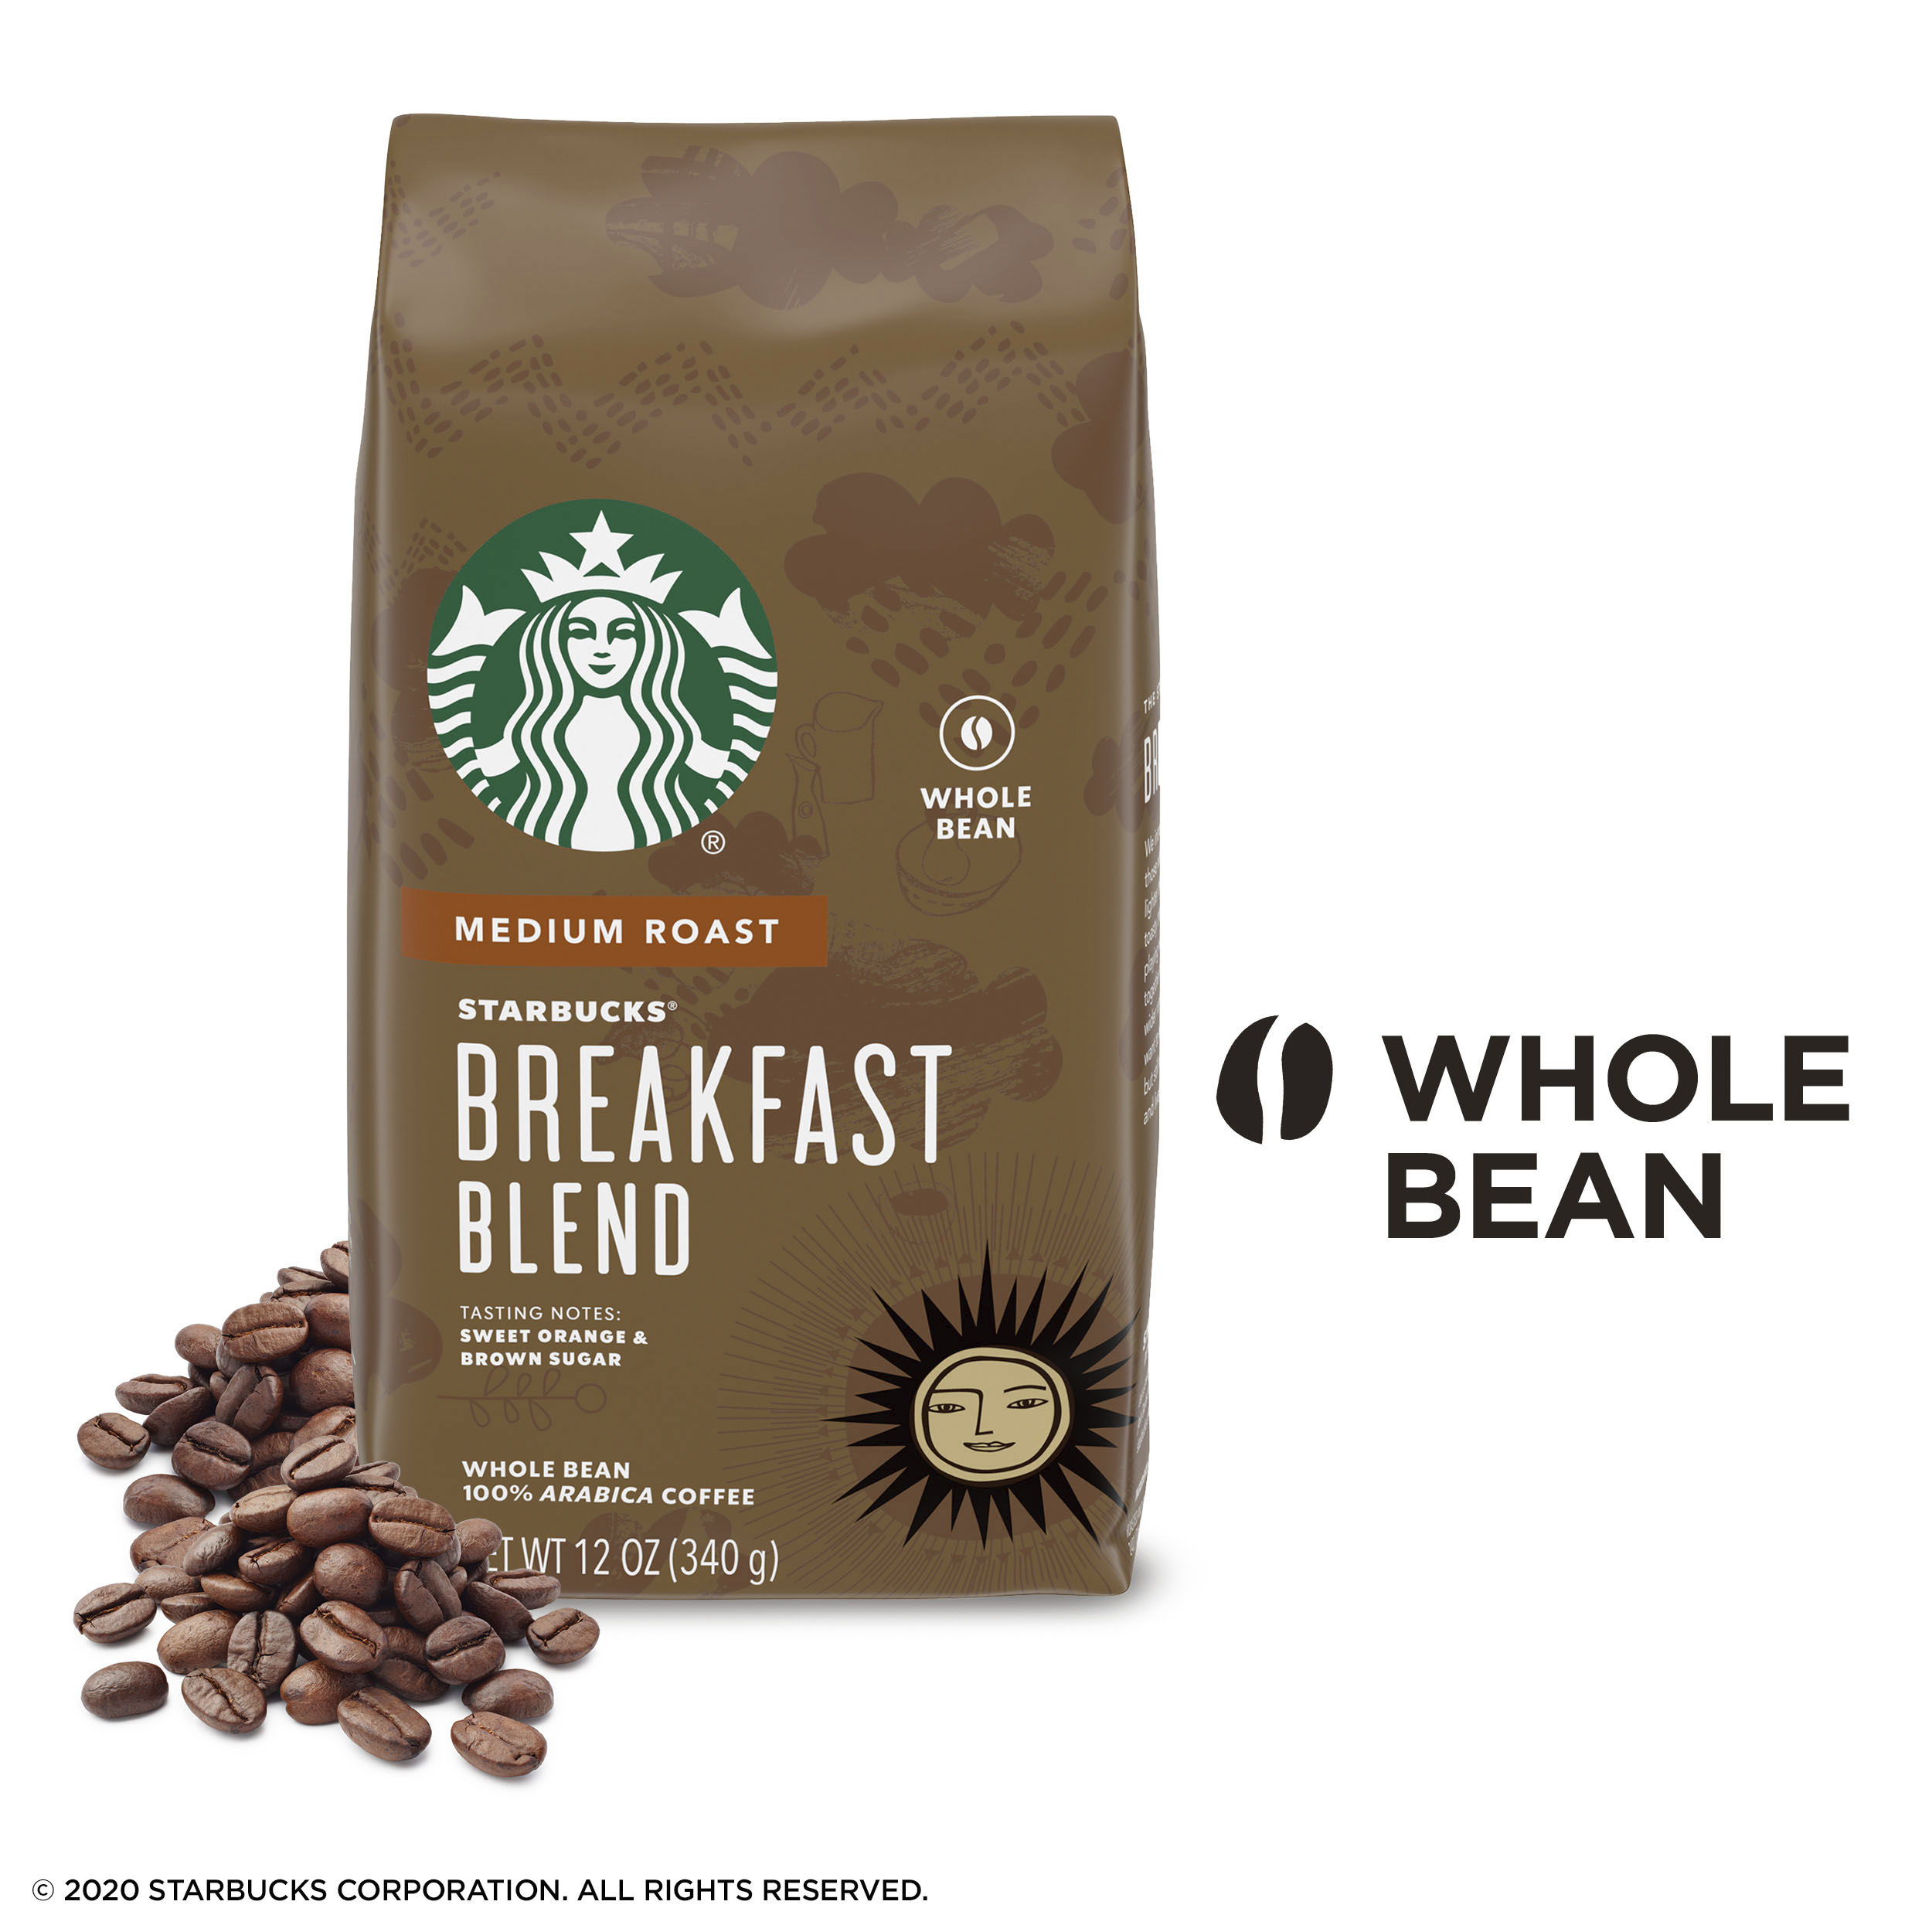 Starbucks Medium Roast Whole Bean Coffee Breakfast Blend 1 Bag 12 